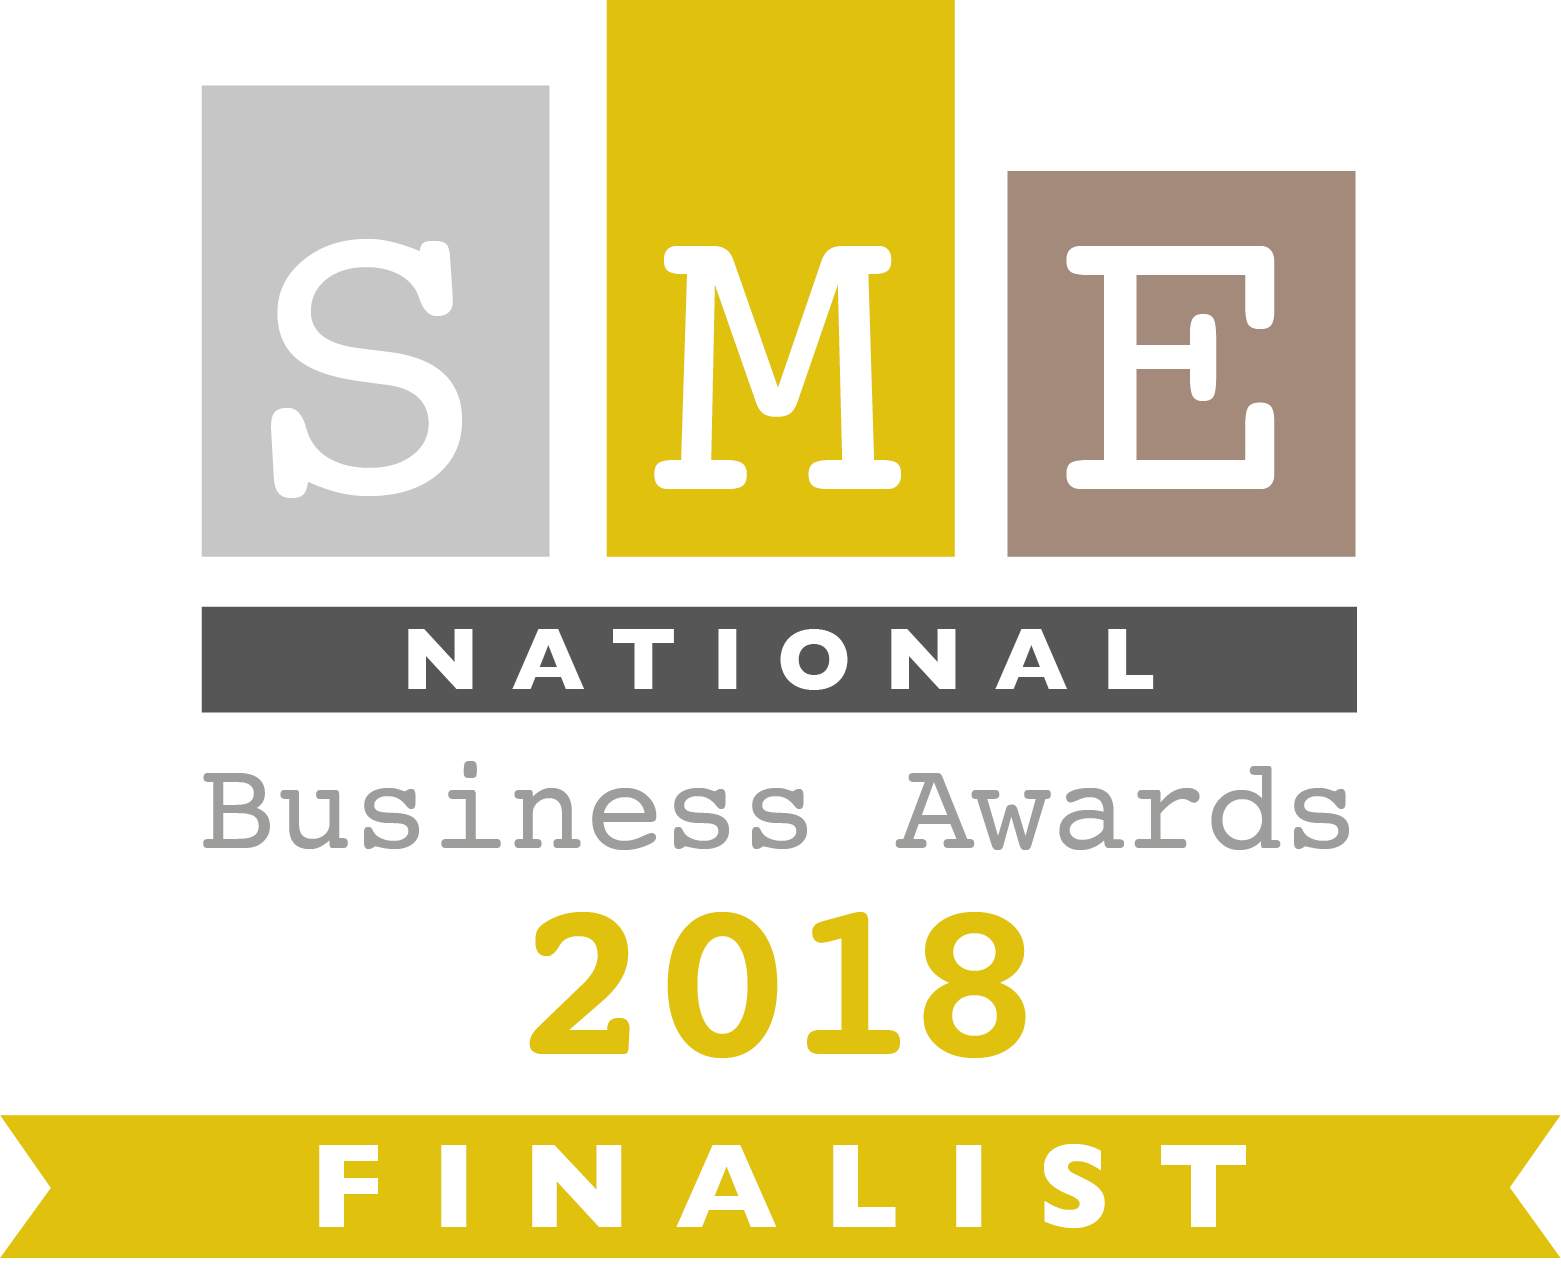 National Business Awards 2018 Finalist